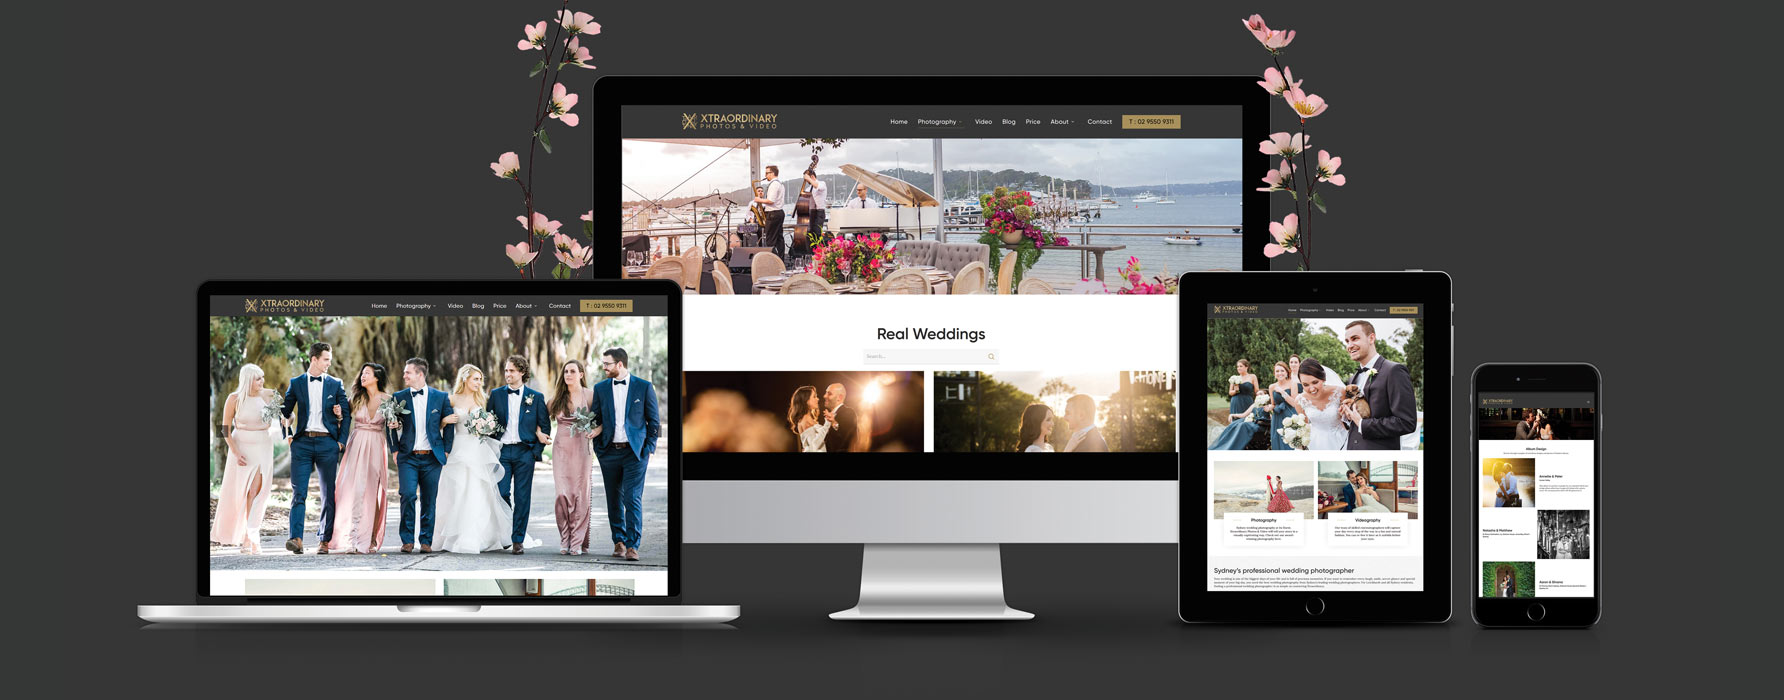 Web design for wedding photographer